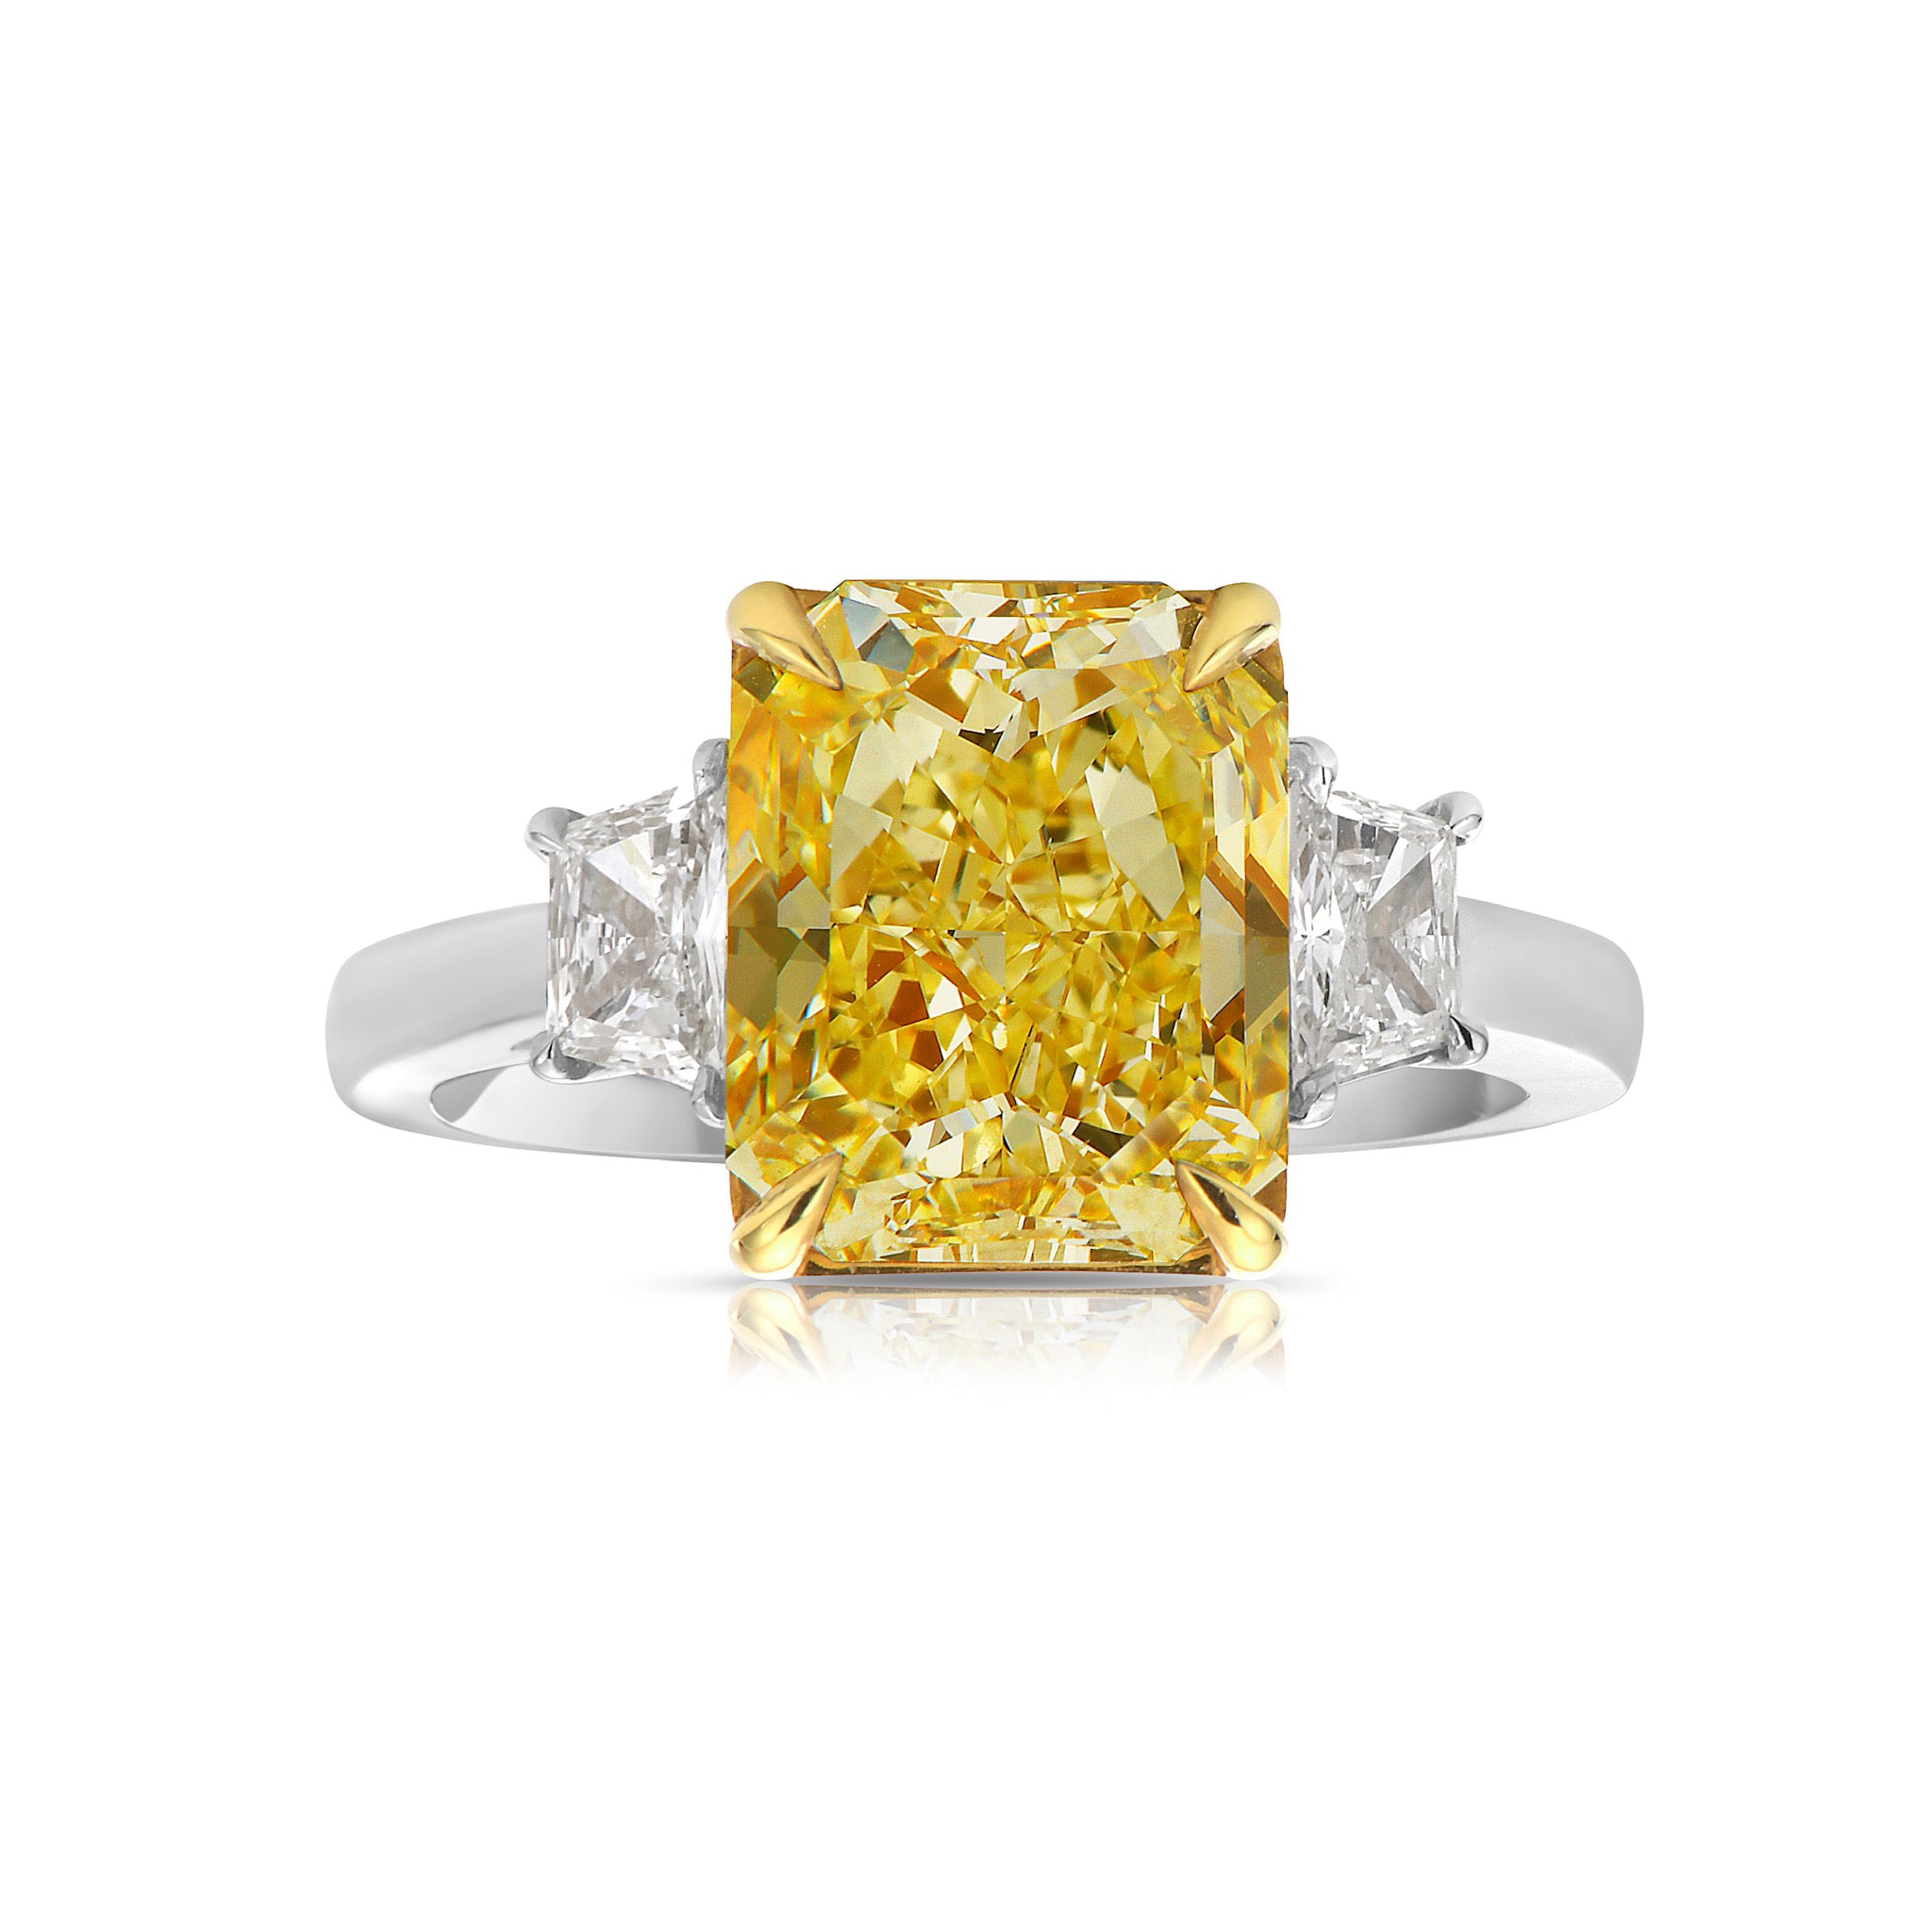 4.01ct GIA Fancy Intense Yellow VS1 Diamond Ring